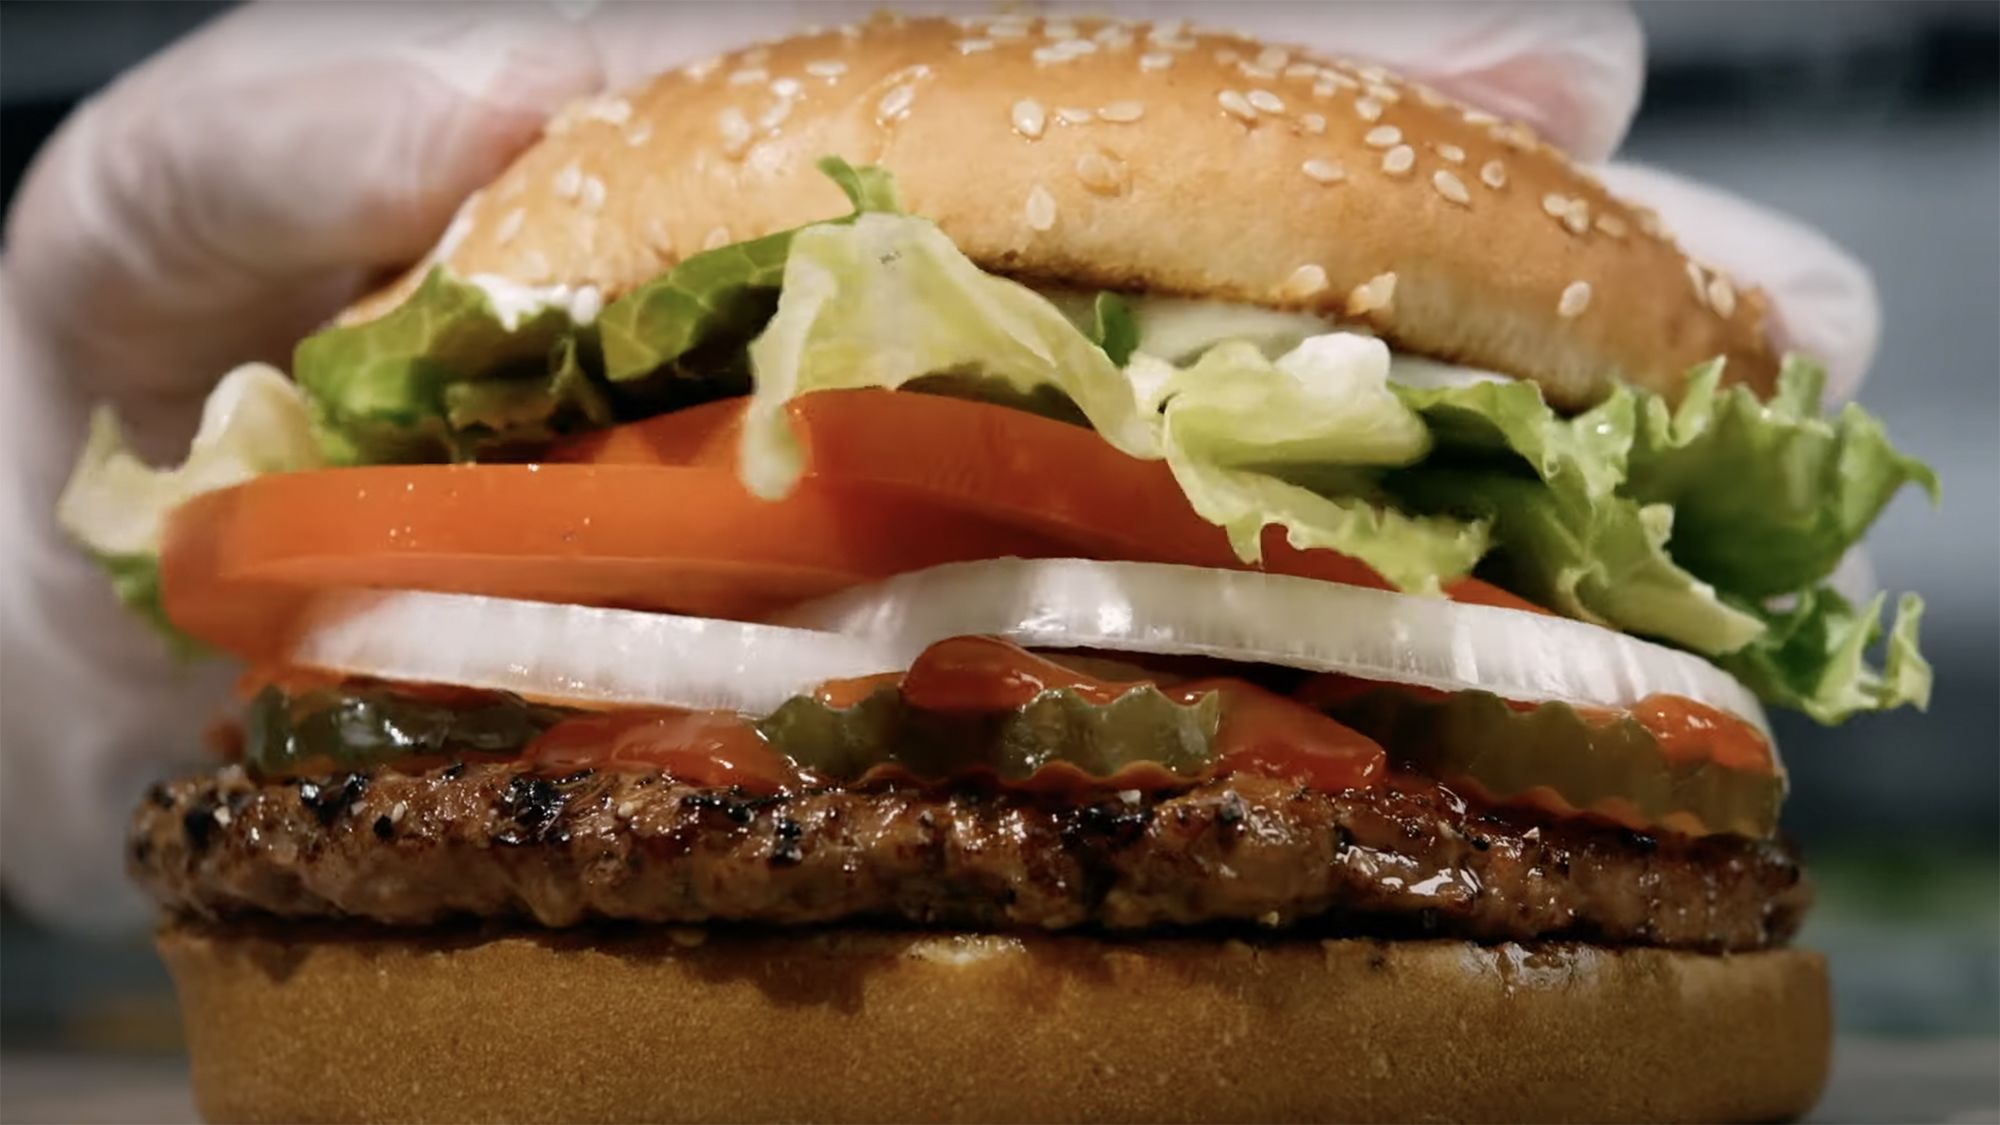 Burger King's secret weapon against McDonald's is the Whopper